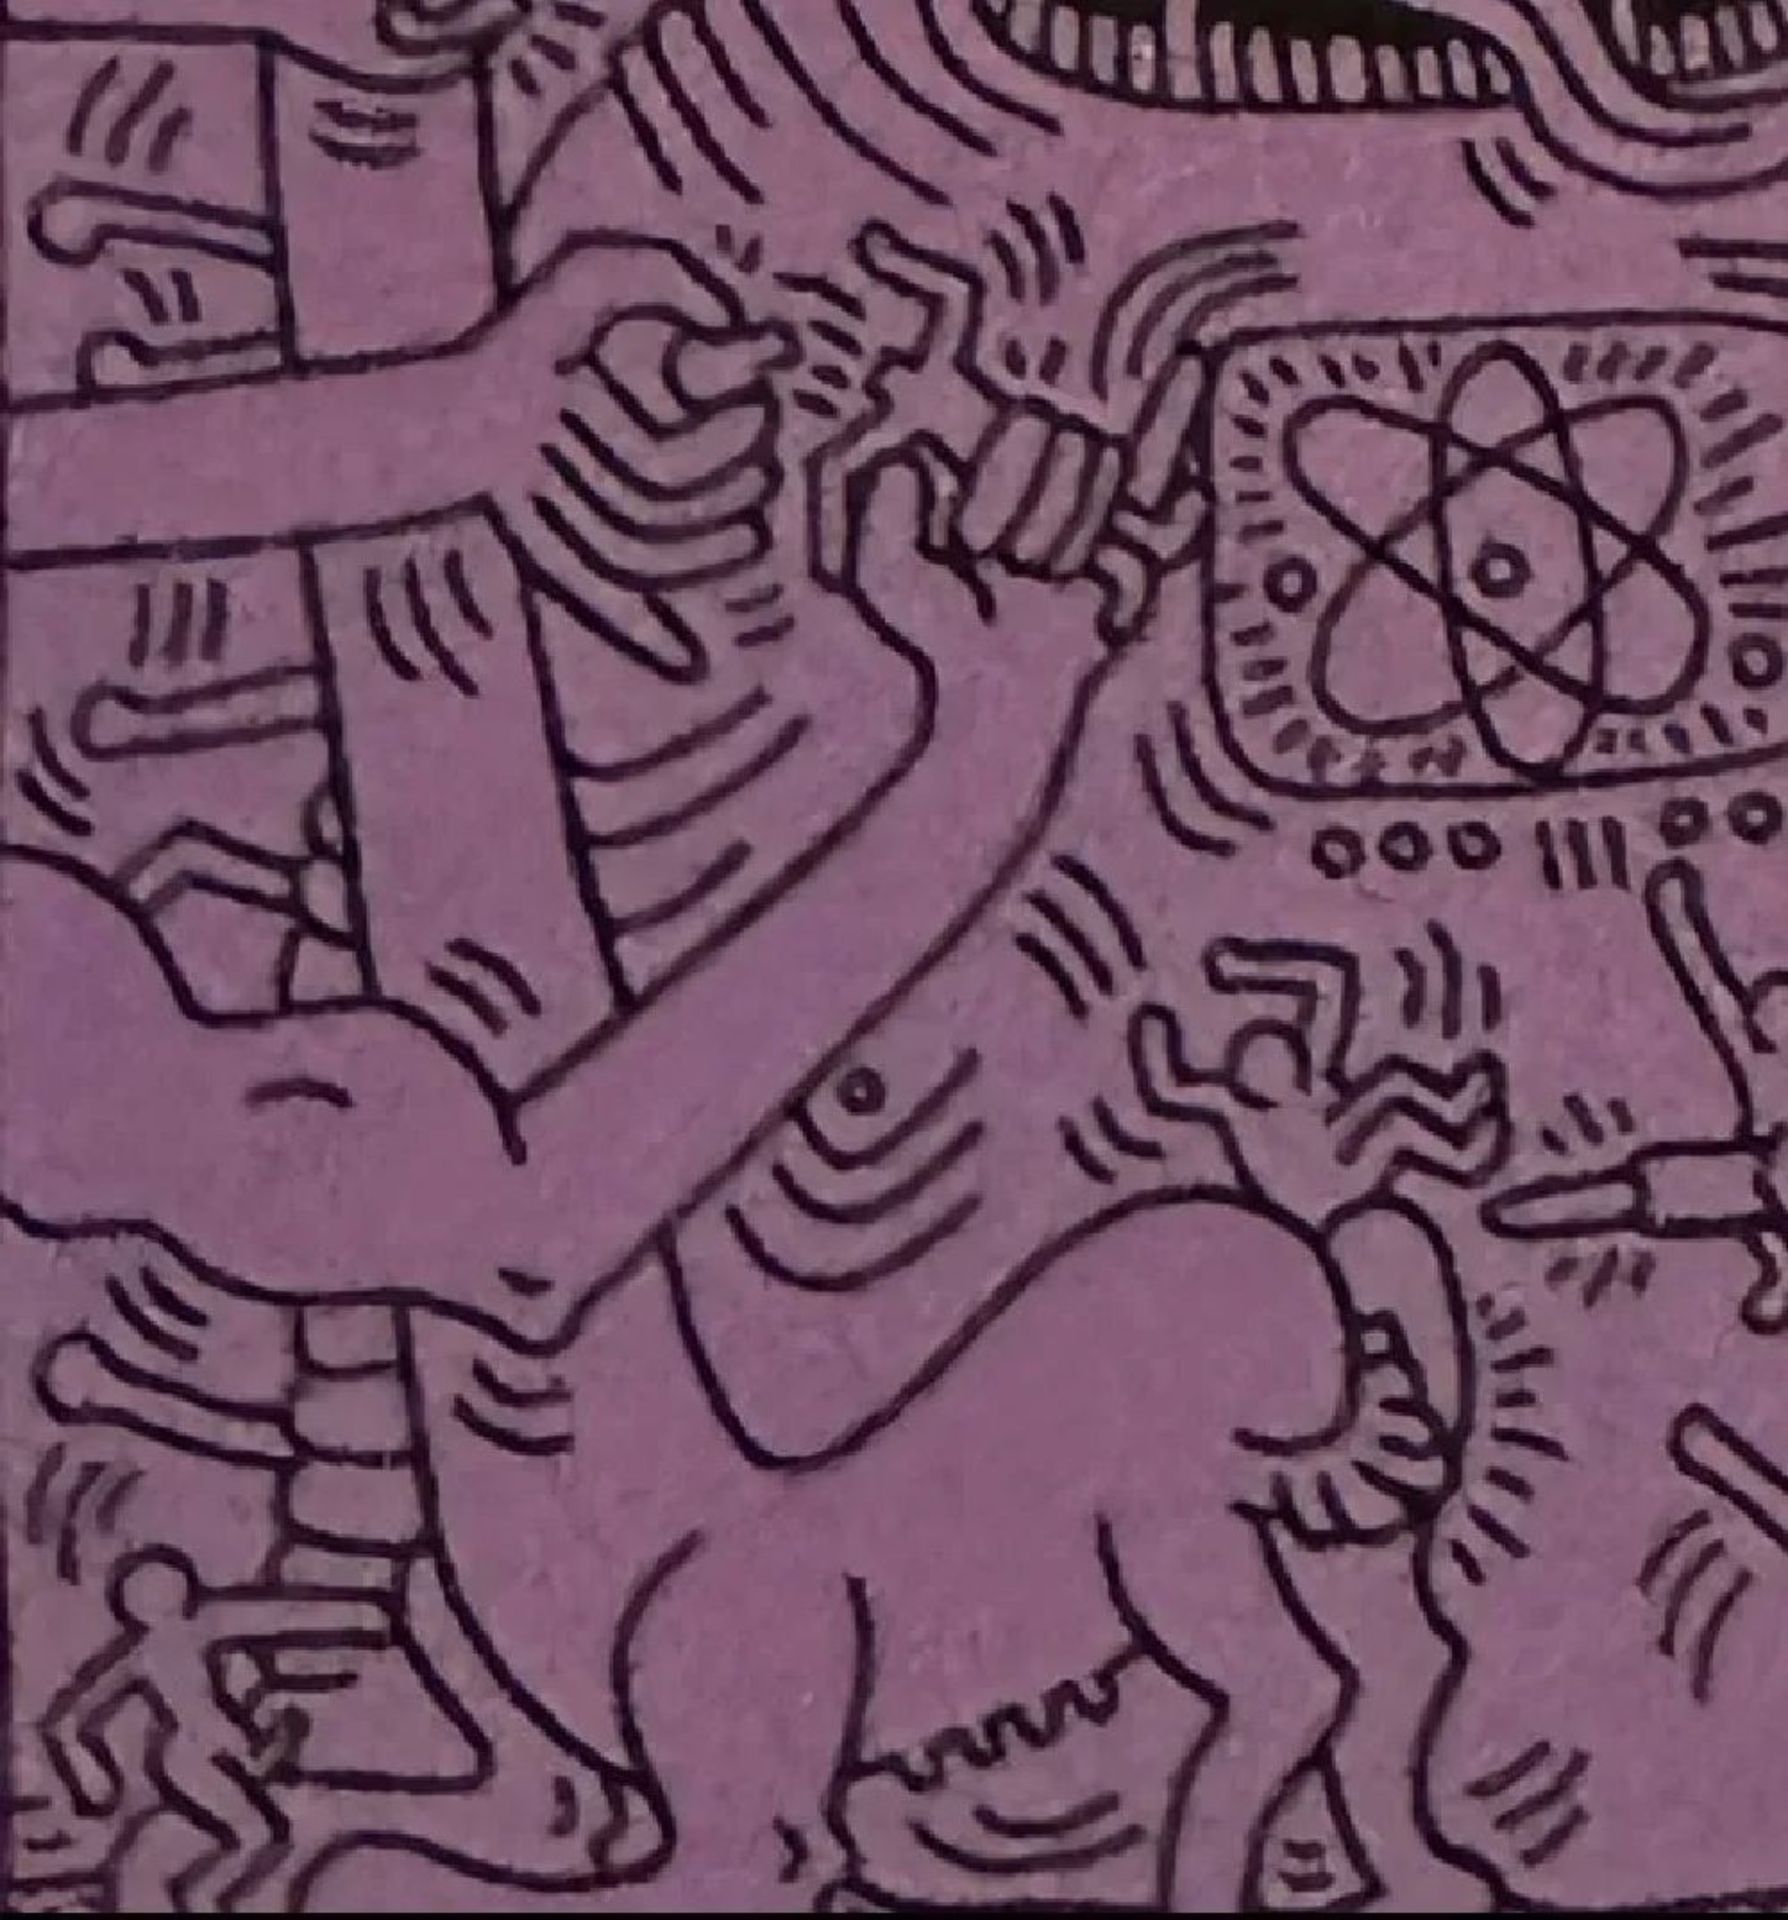 Keith Haring "Untitled" Print. - Bild 4 aus 6